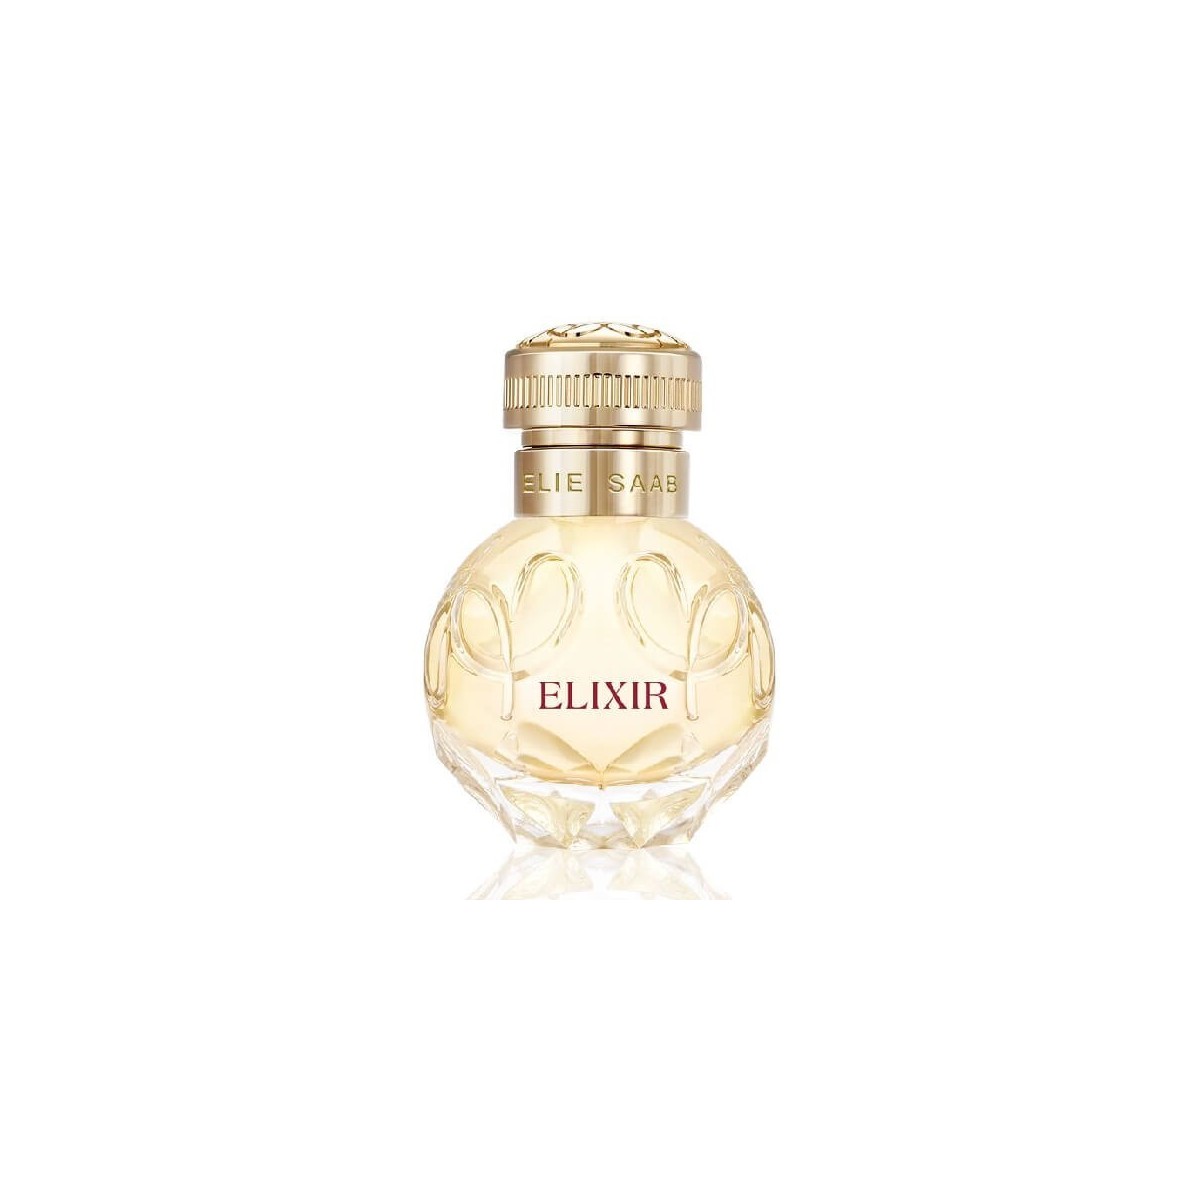 Elie Saab Elixir Eau de Parfum 30ml spray